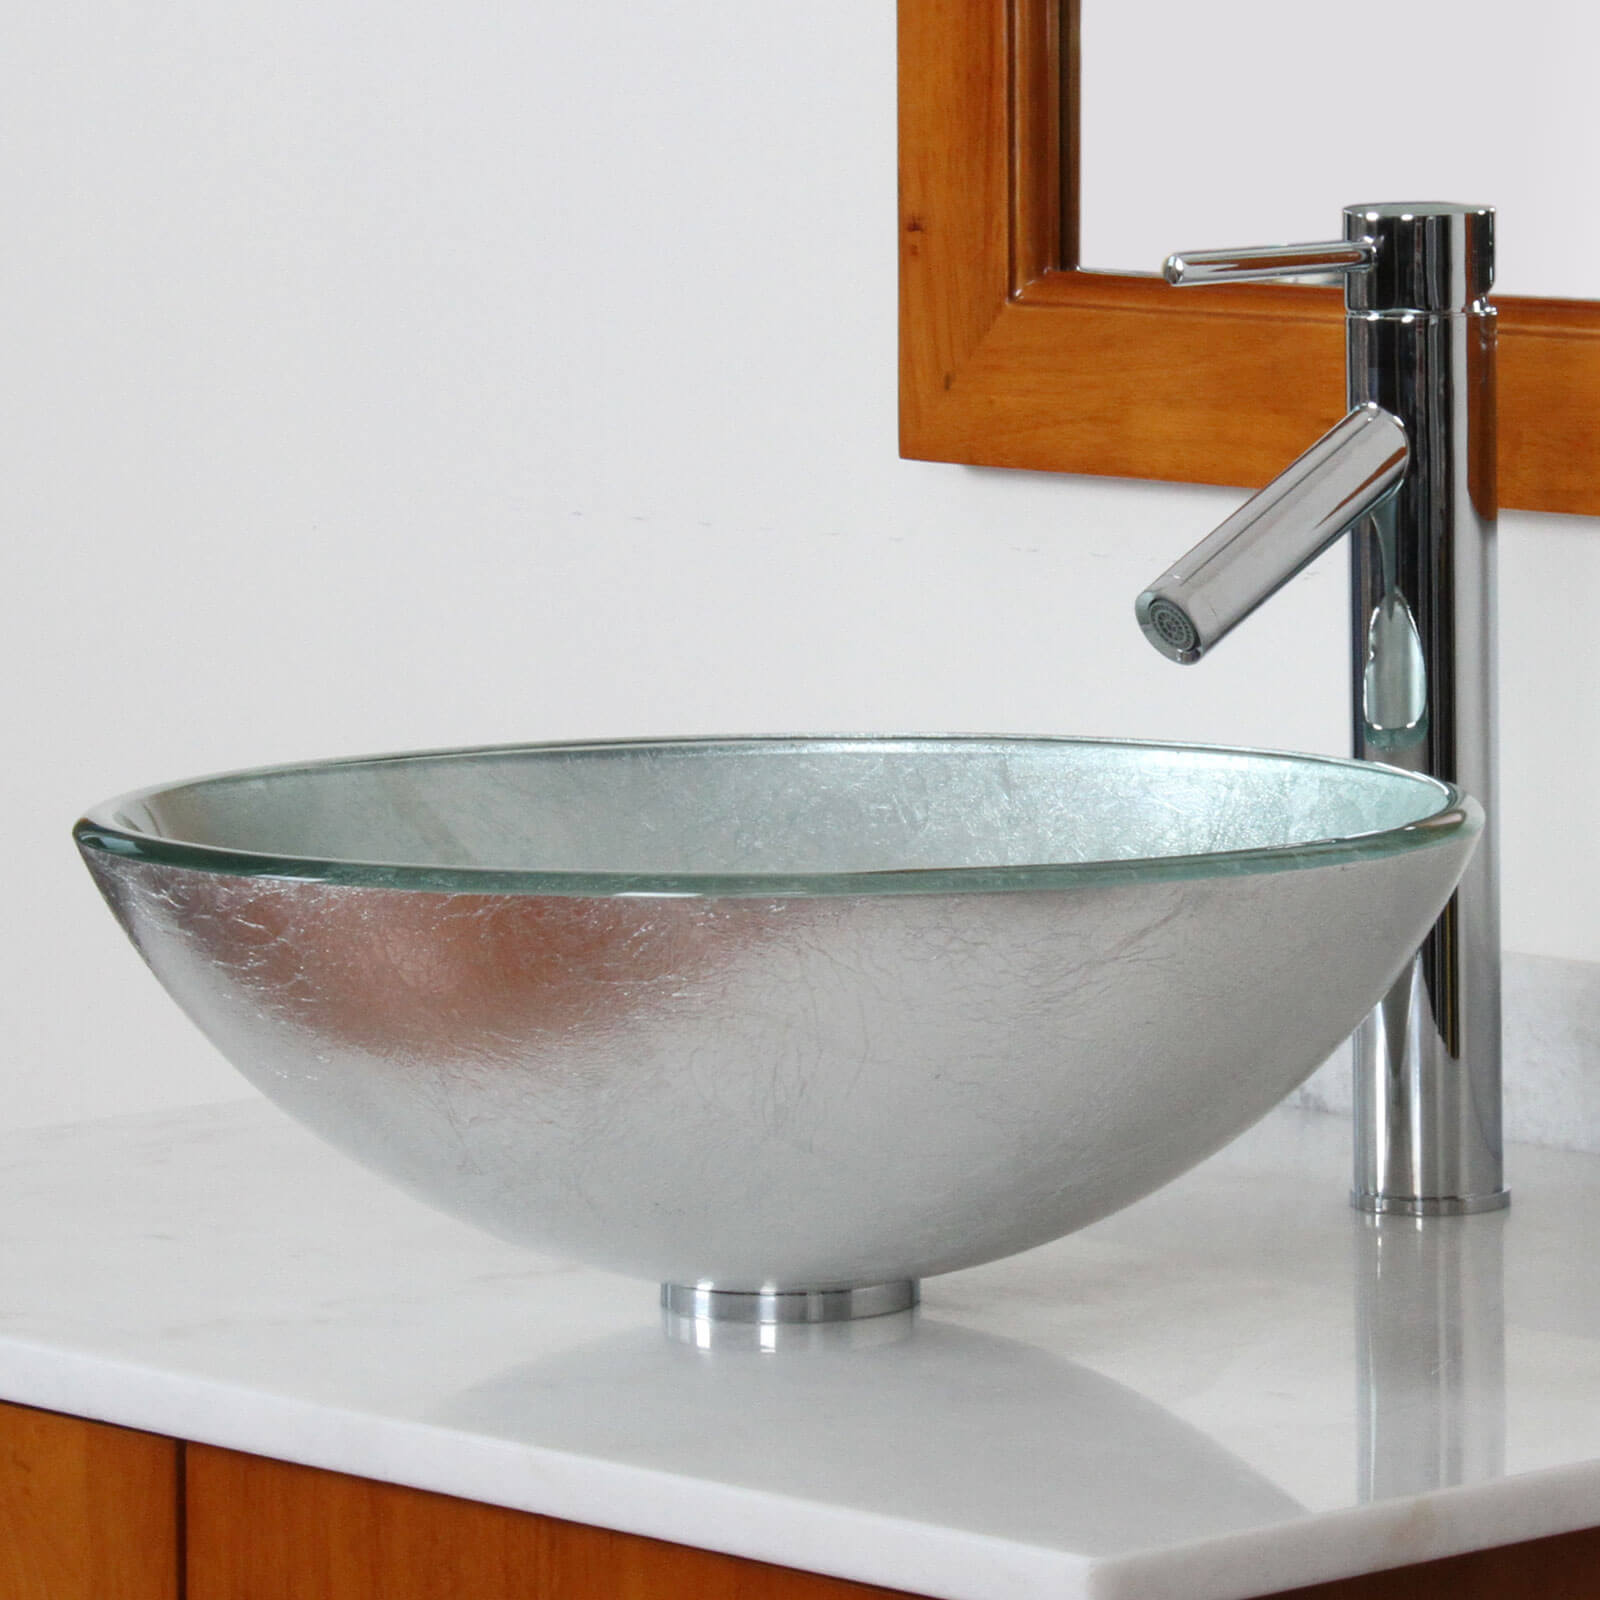 Bathroom sink design 29